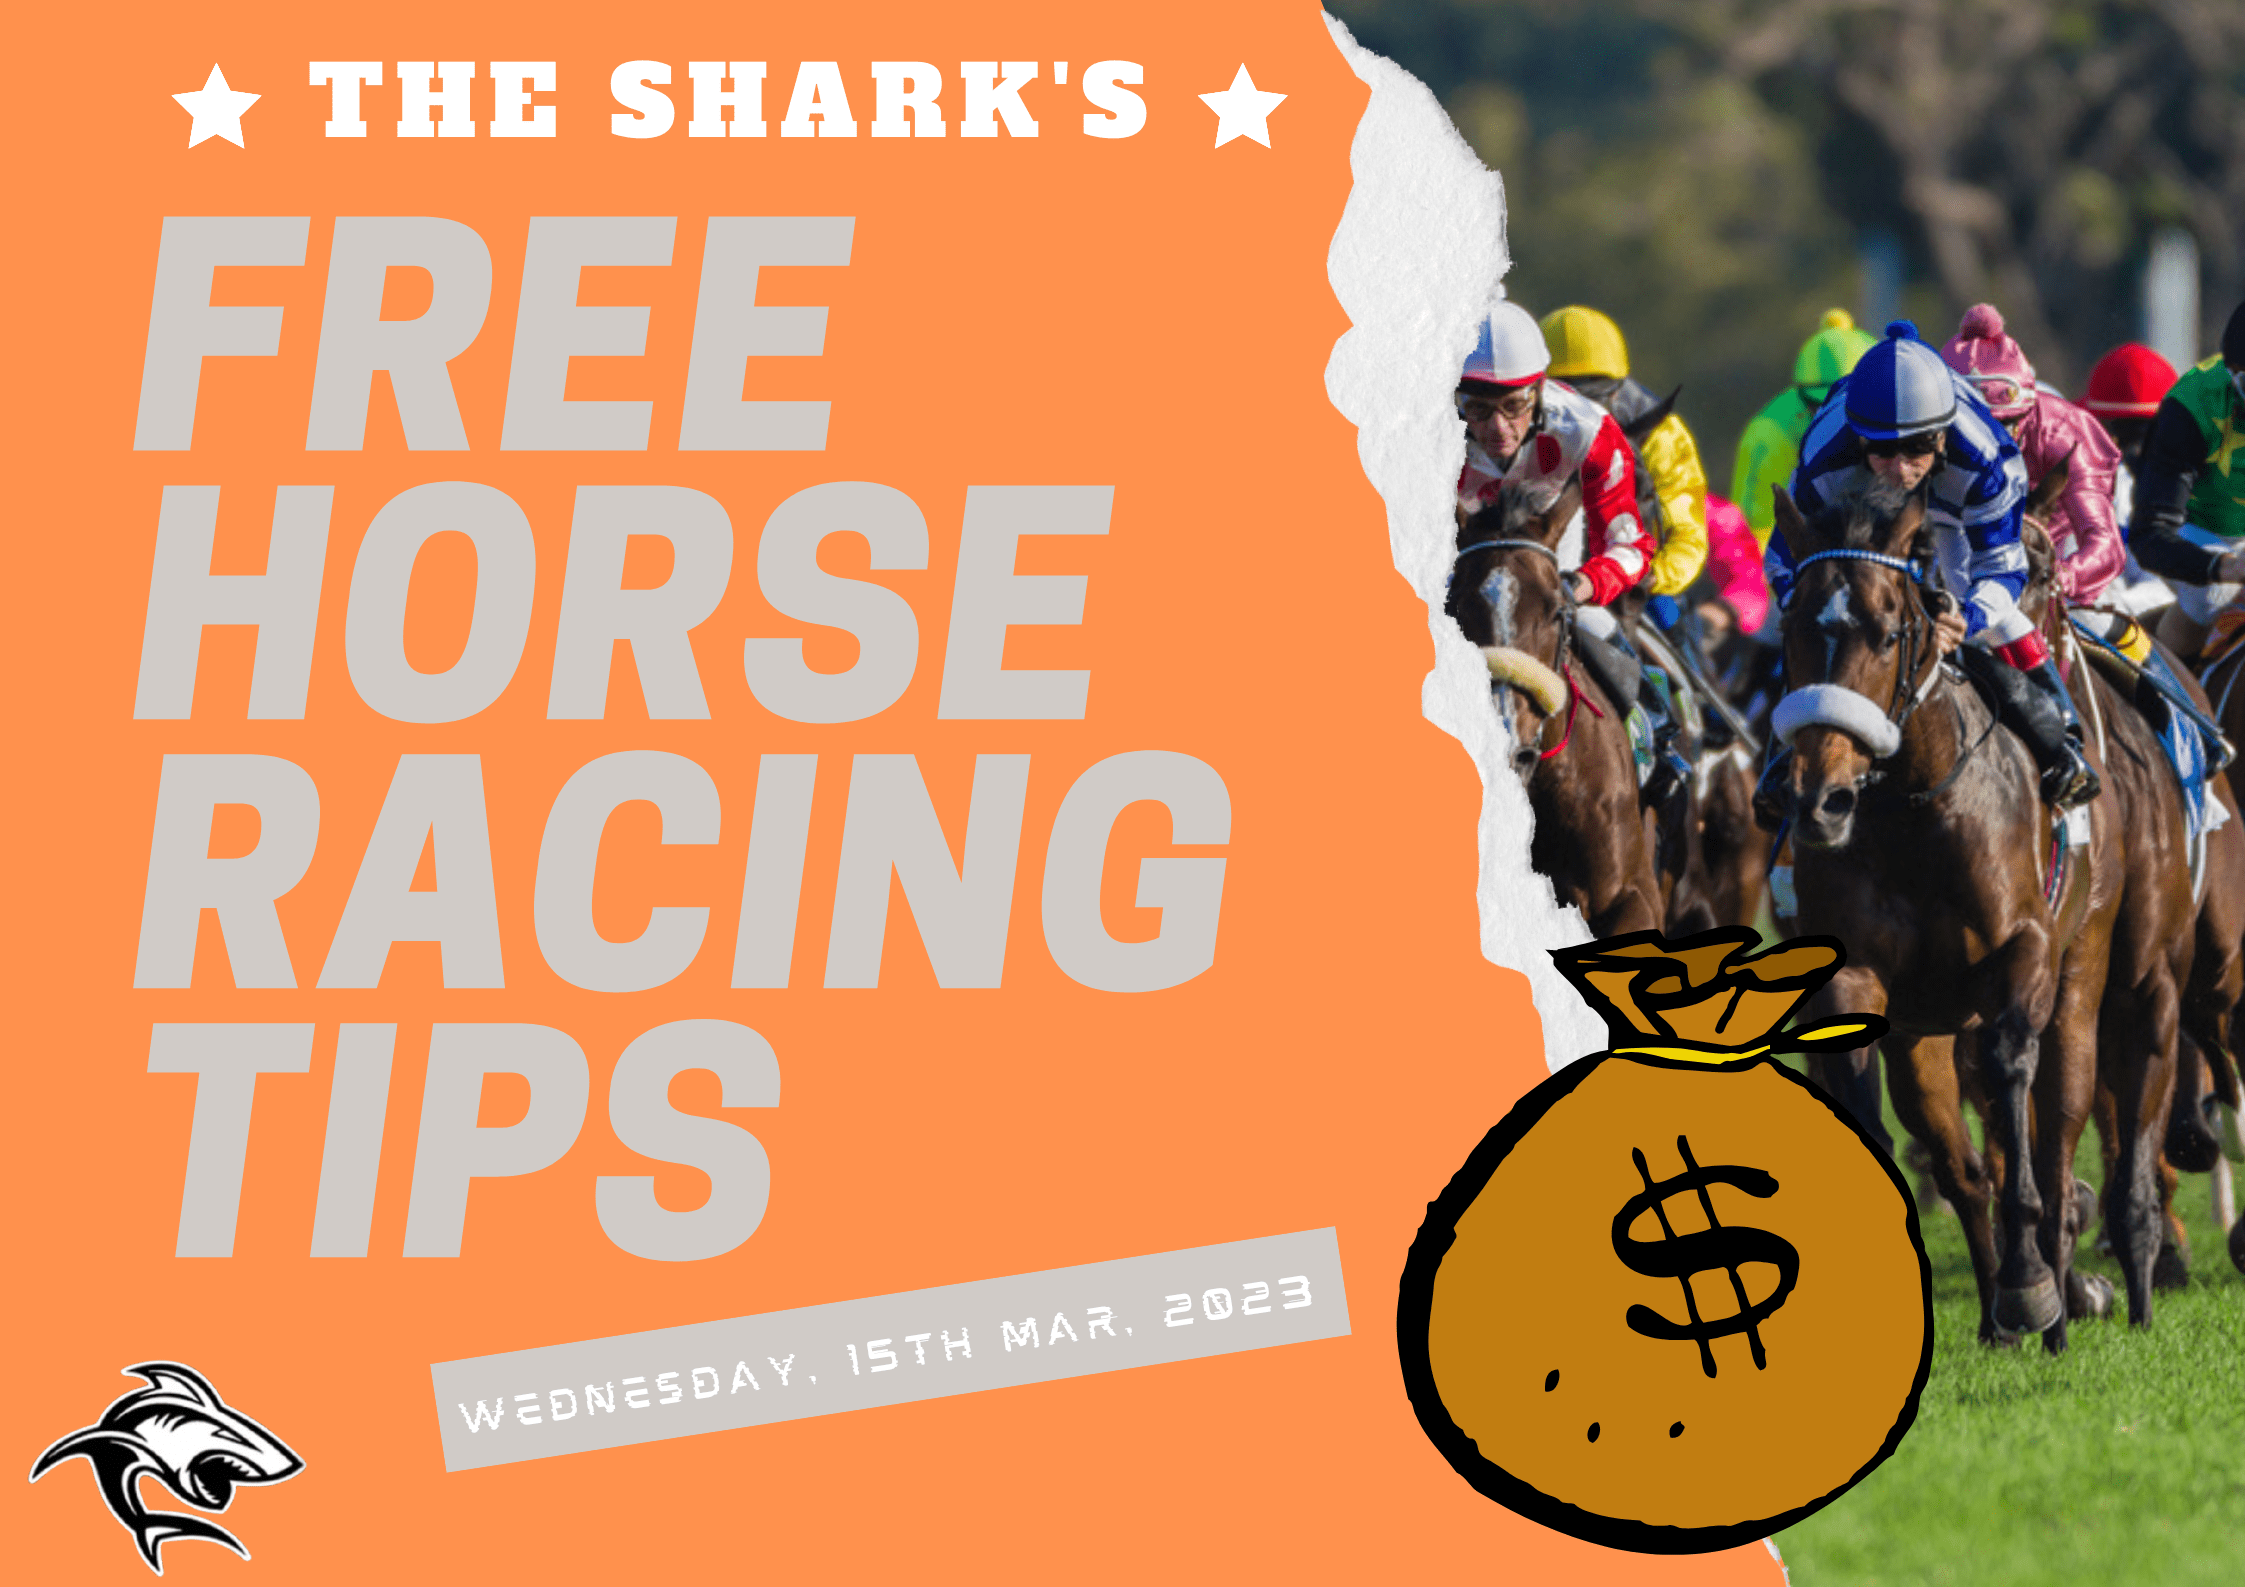 Free Horse Racing Tips - 15th Mar